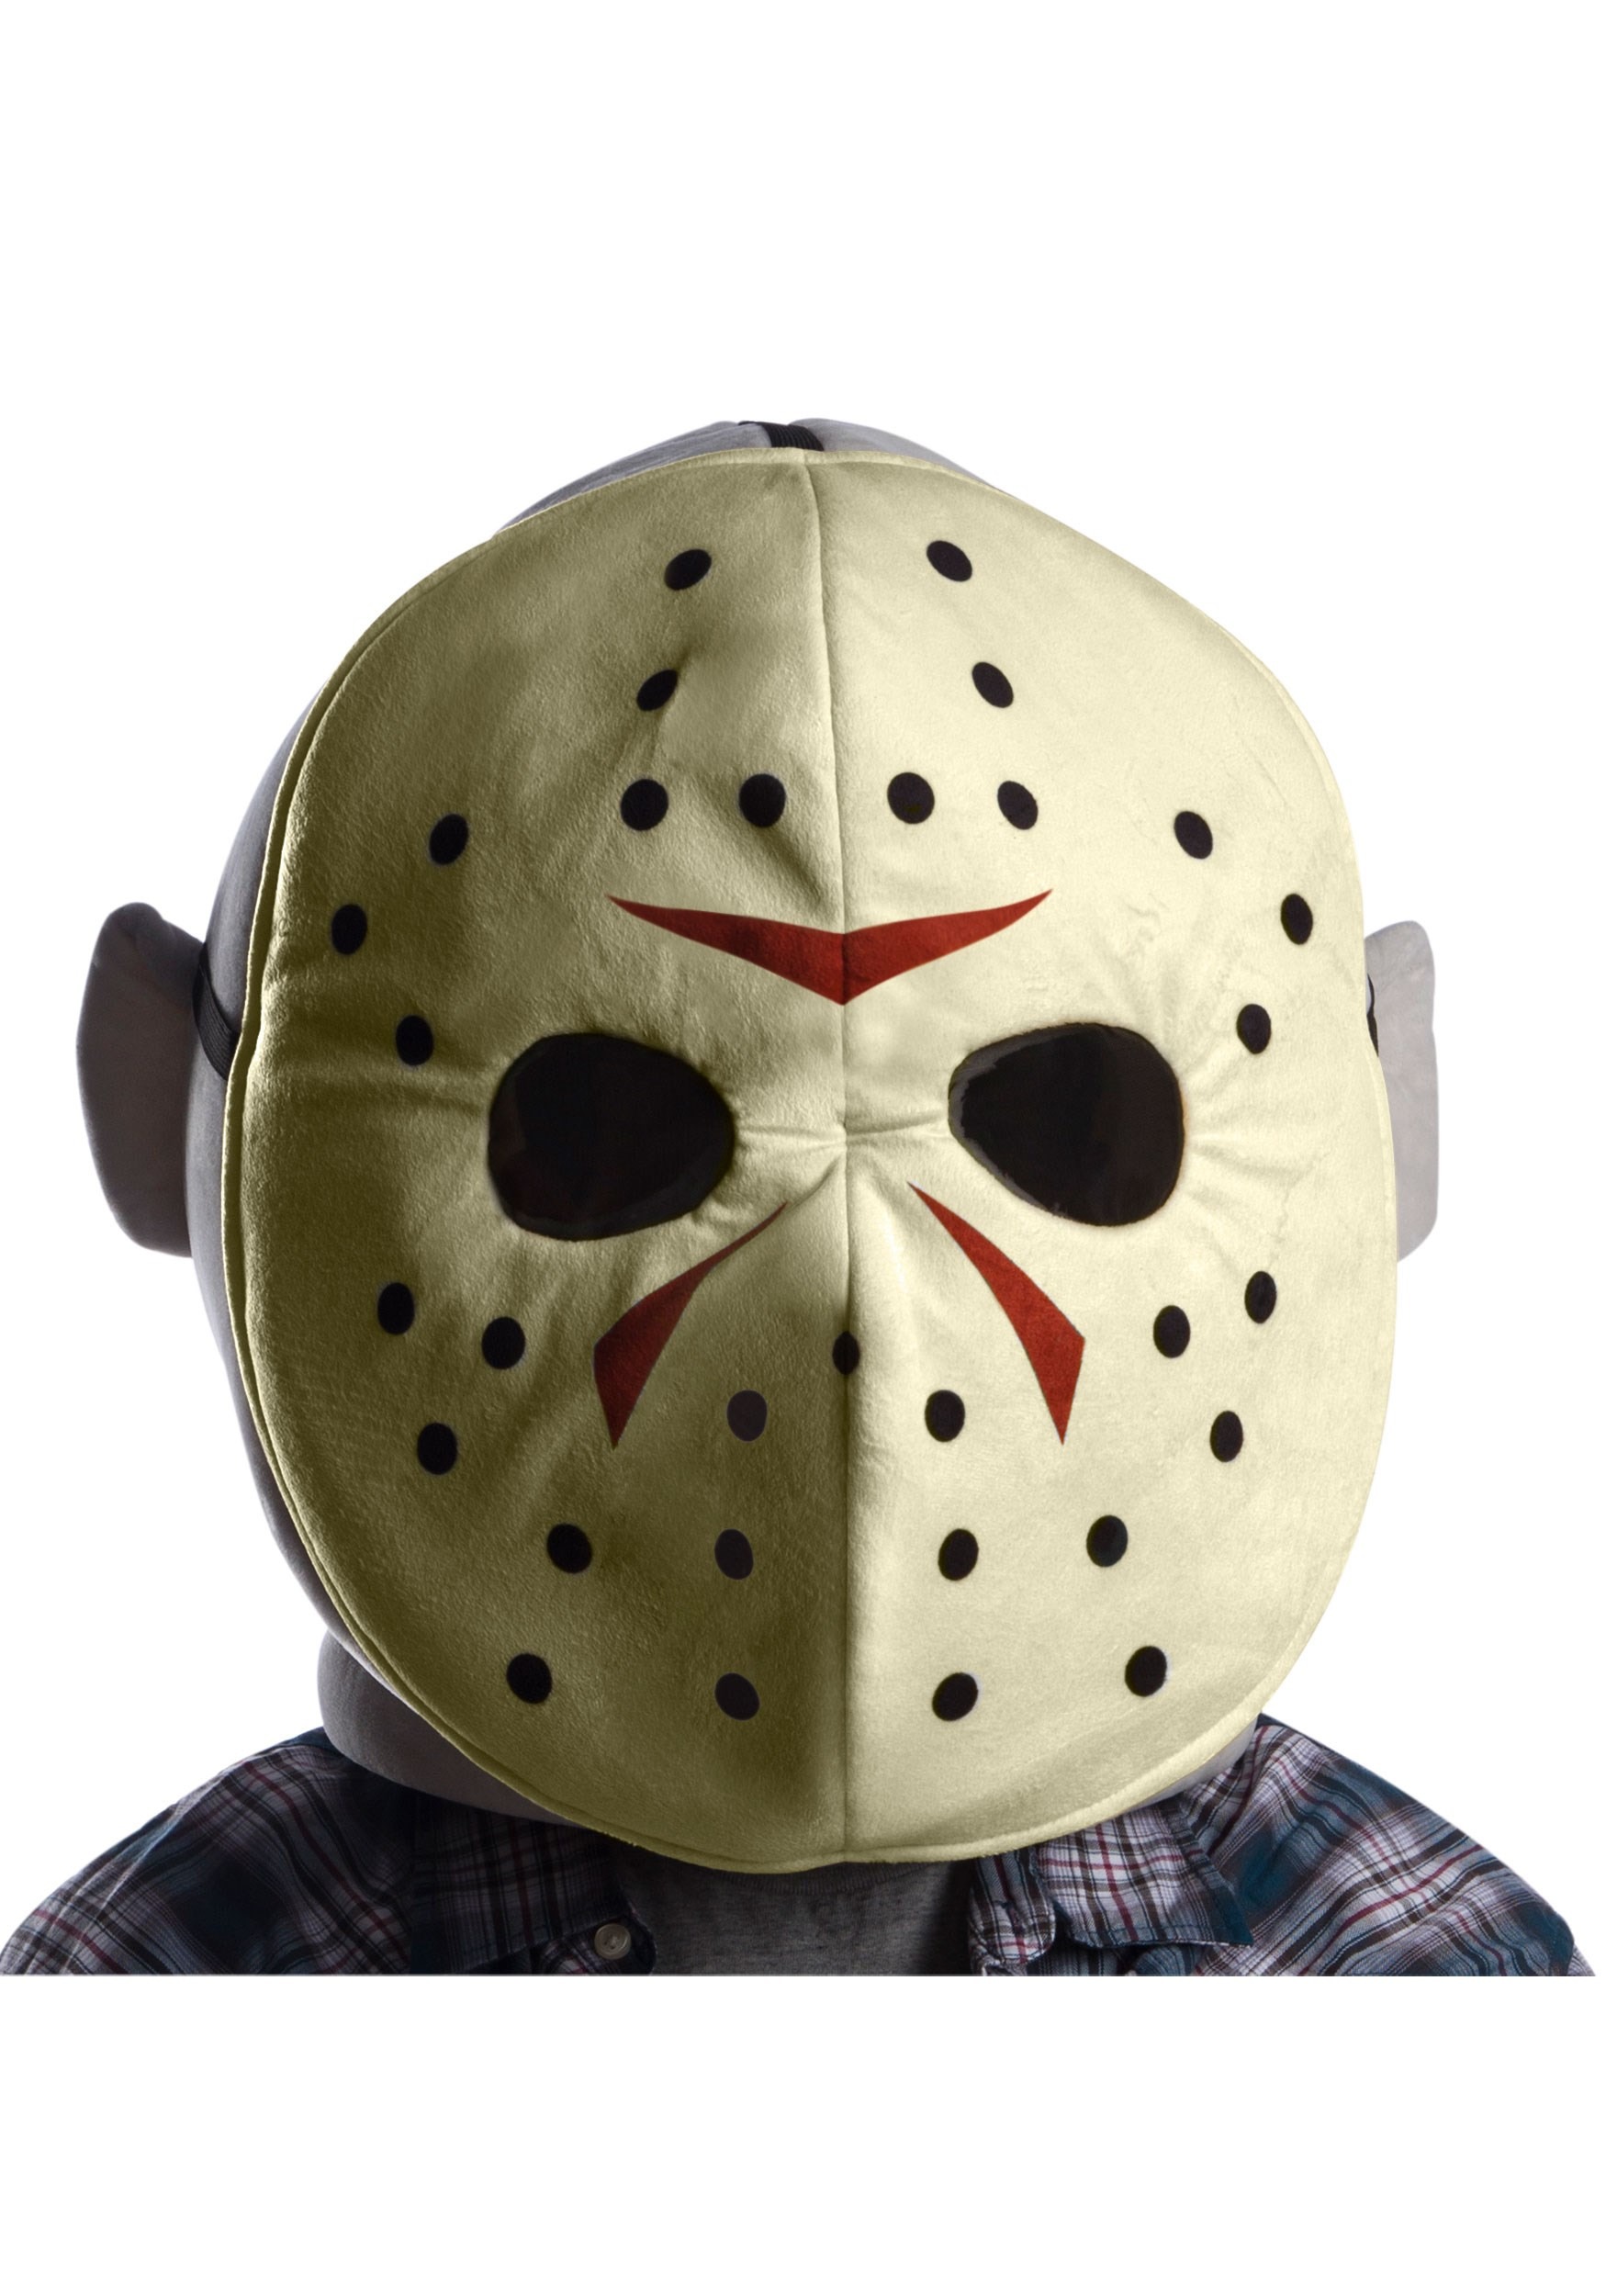 Jason Friday The 13th Mascot Mask